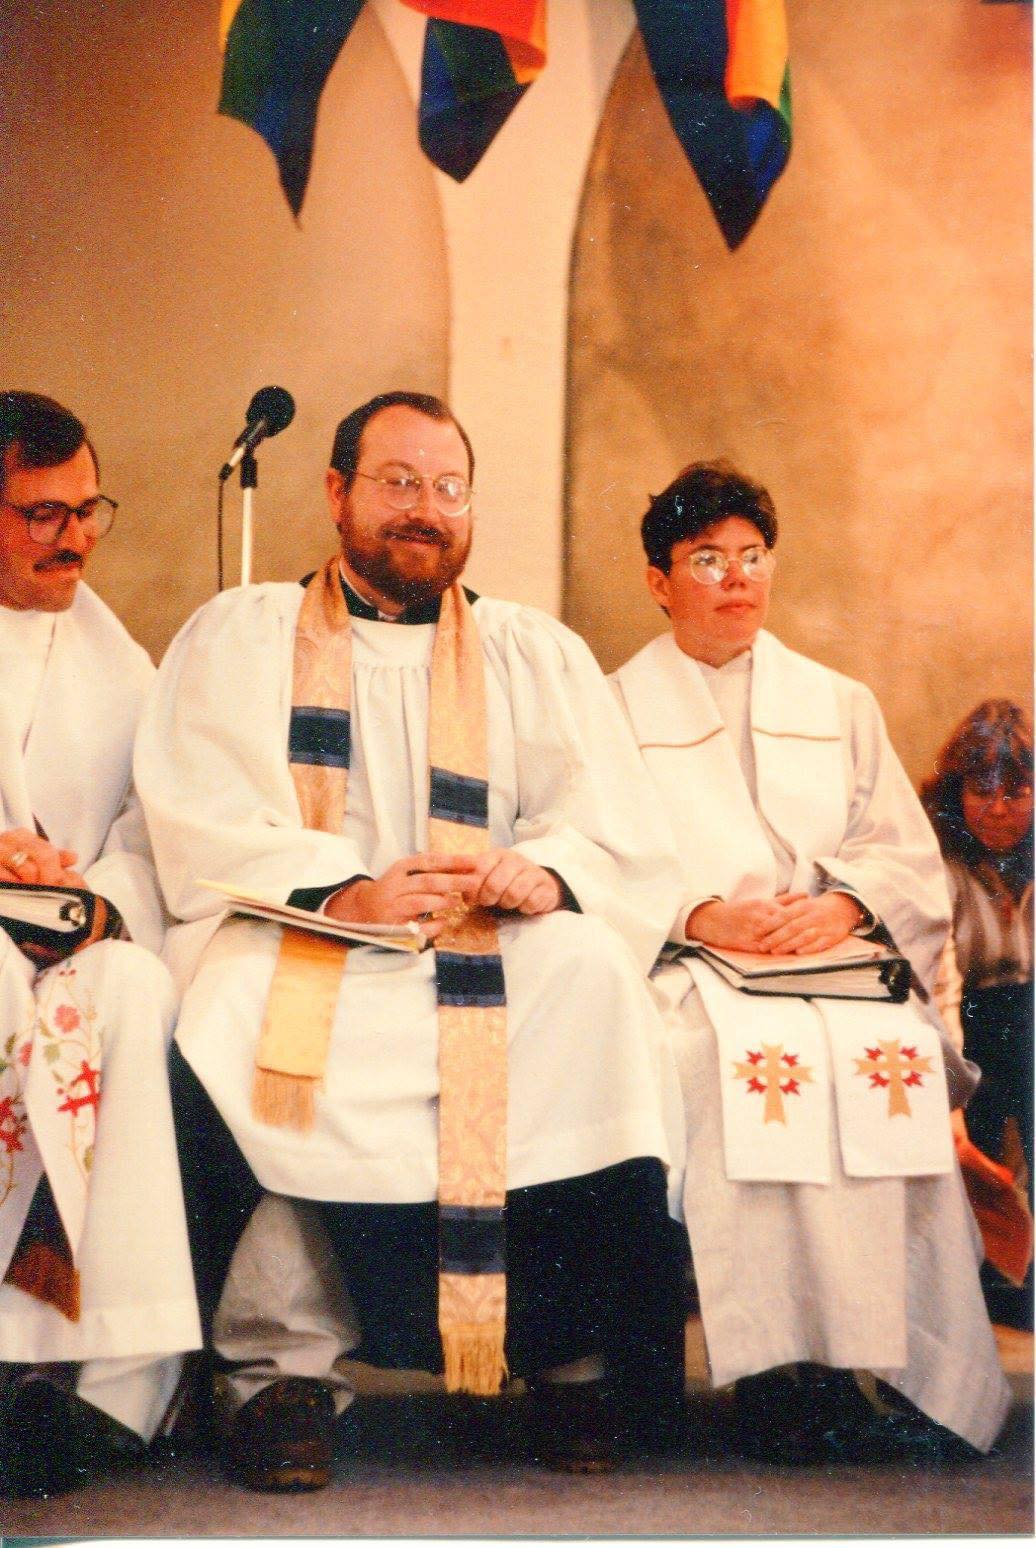 Three pastors wearing church garb sit near a microphone.